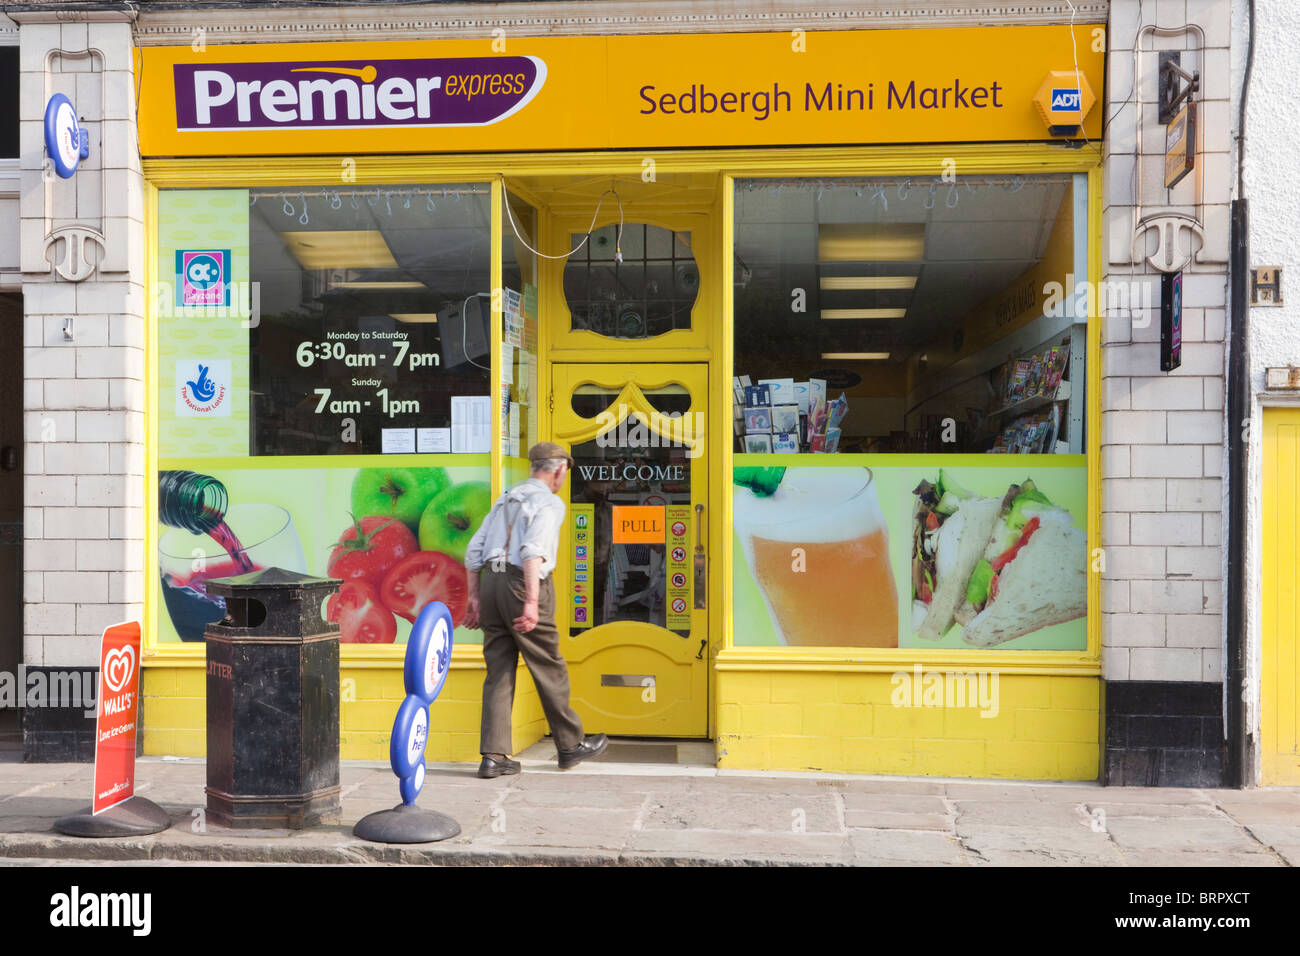 The Premier Express Mini Market in Sedbergh, Cumbria Stock Photo